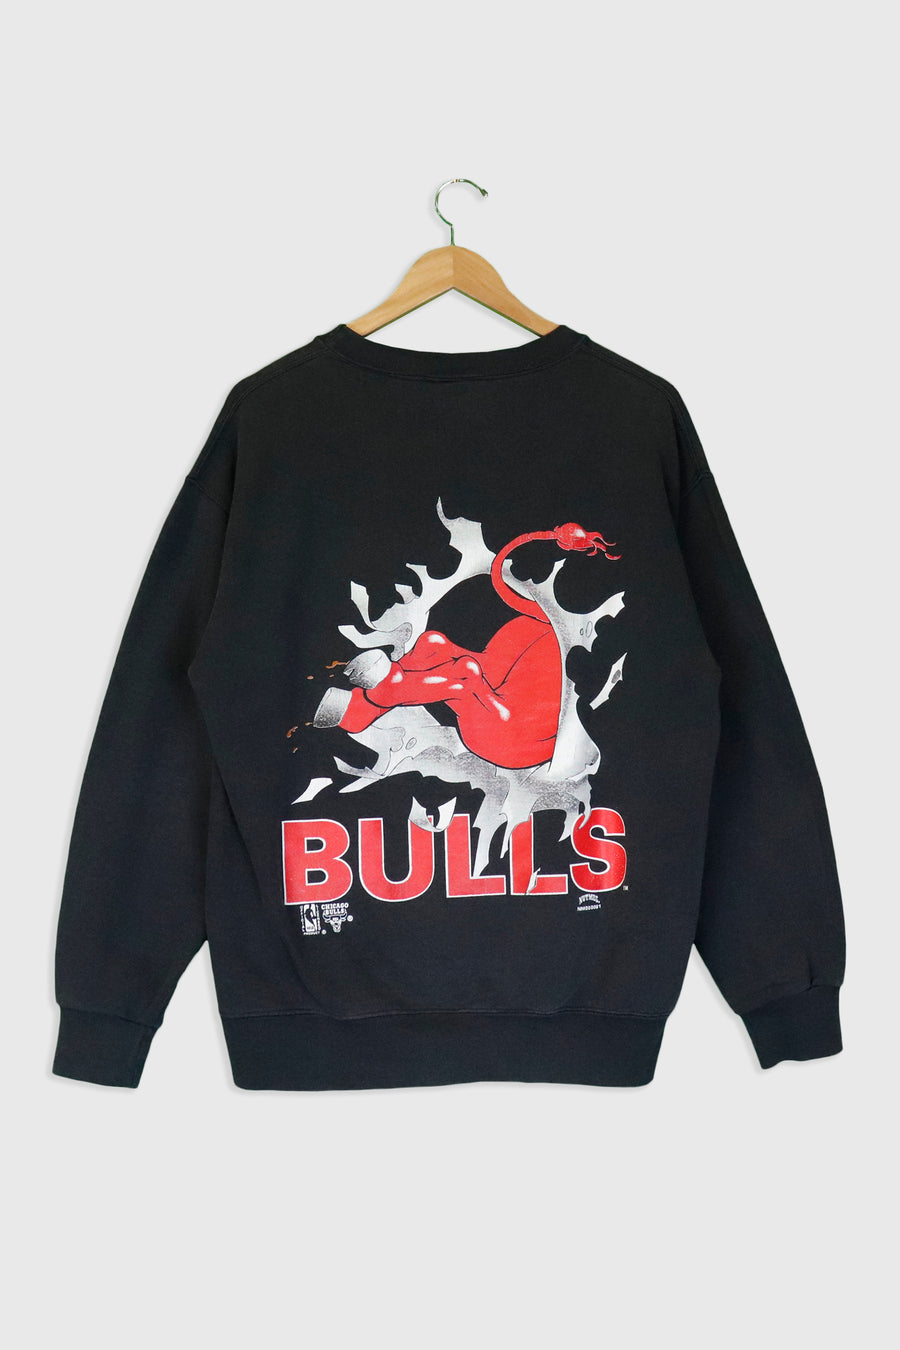 Vintage NBA Chicago Bulls Bull Face Sweatshirt Sz M